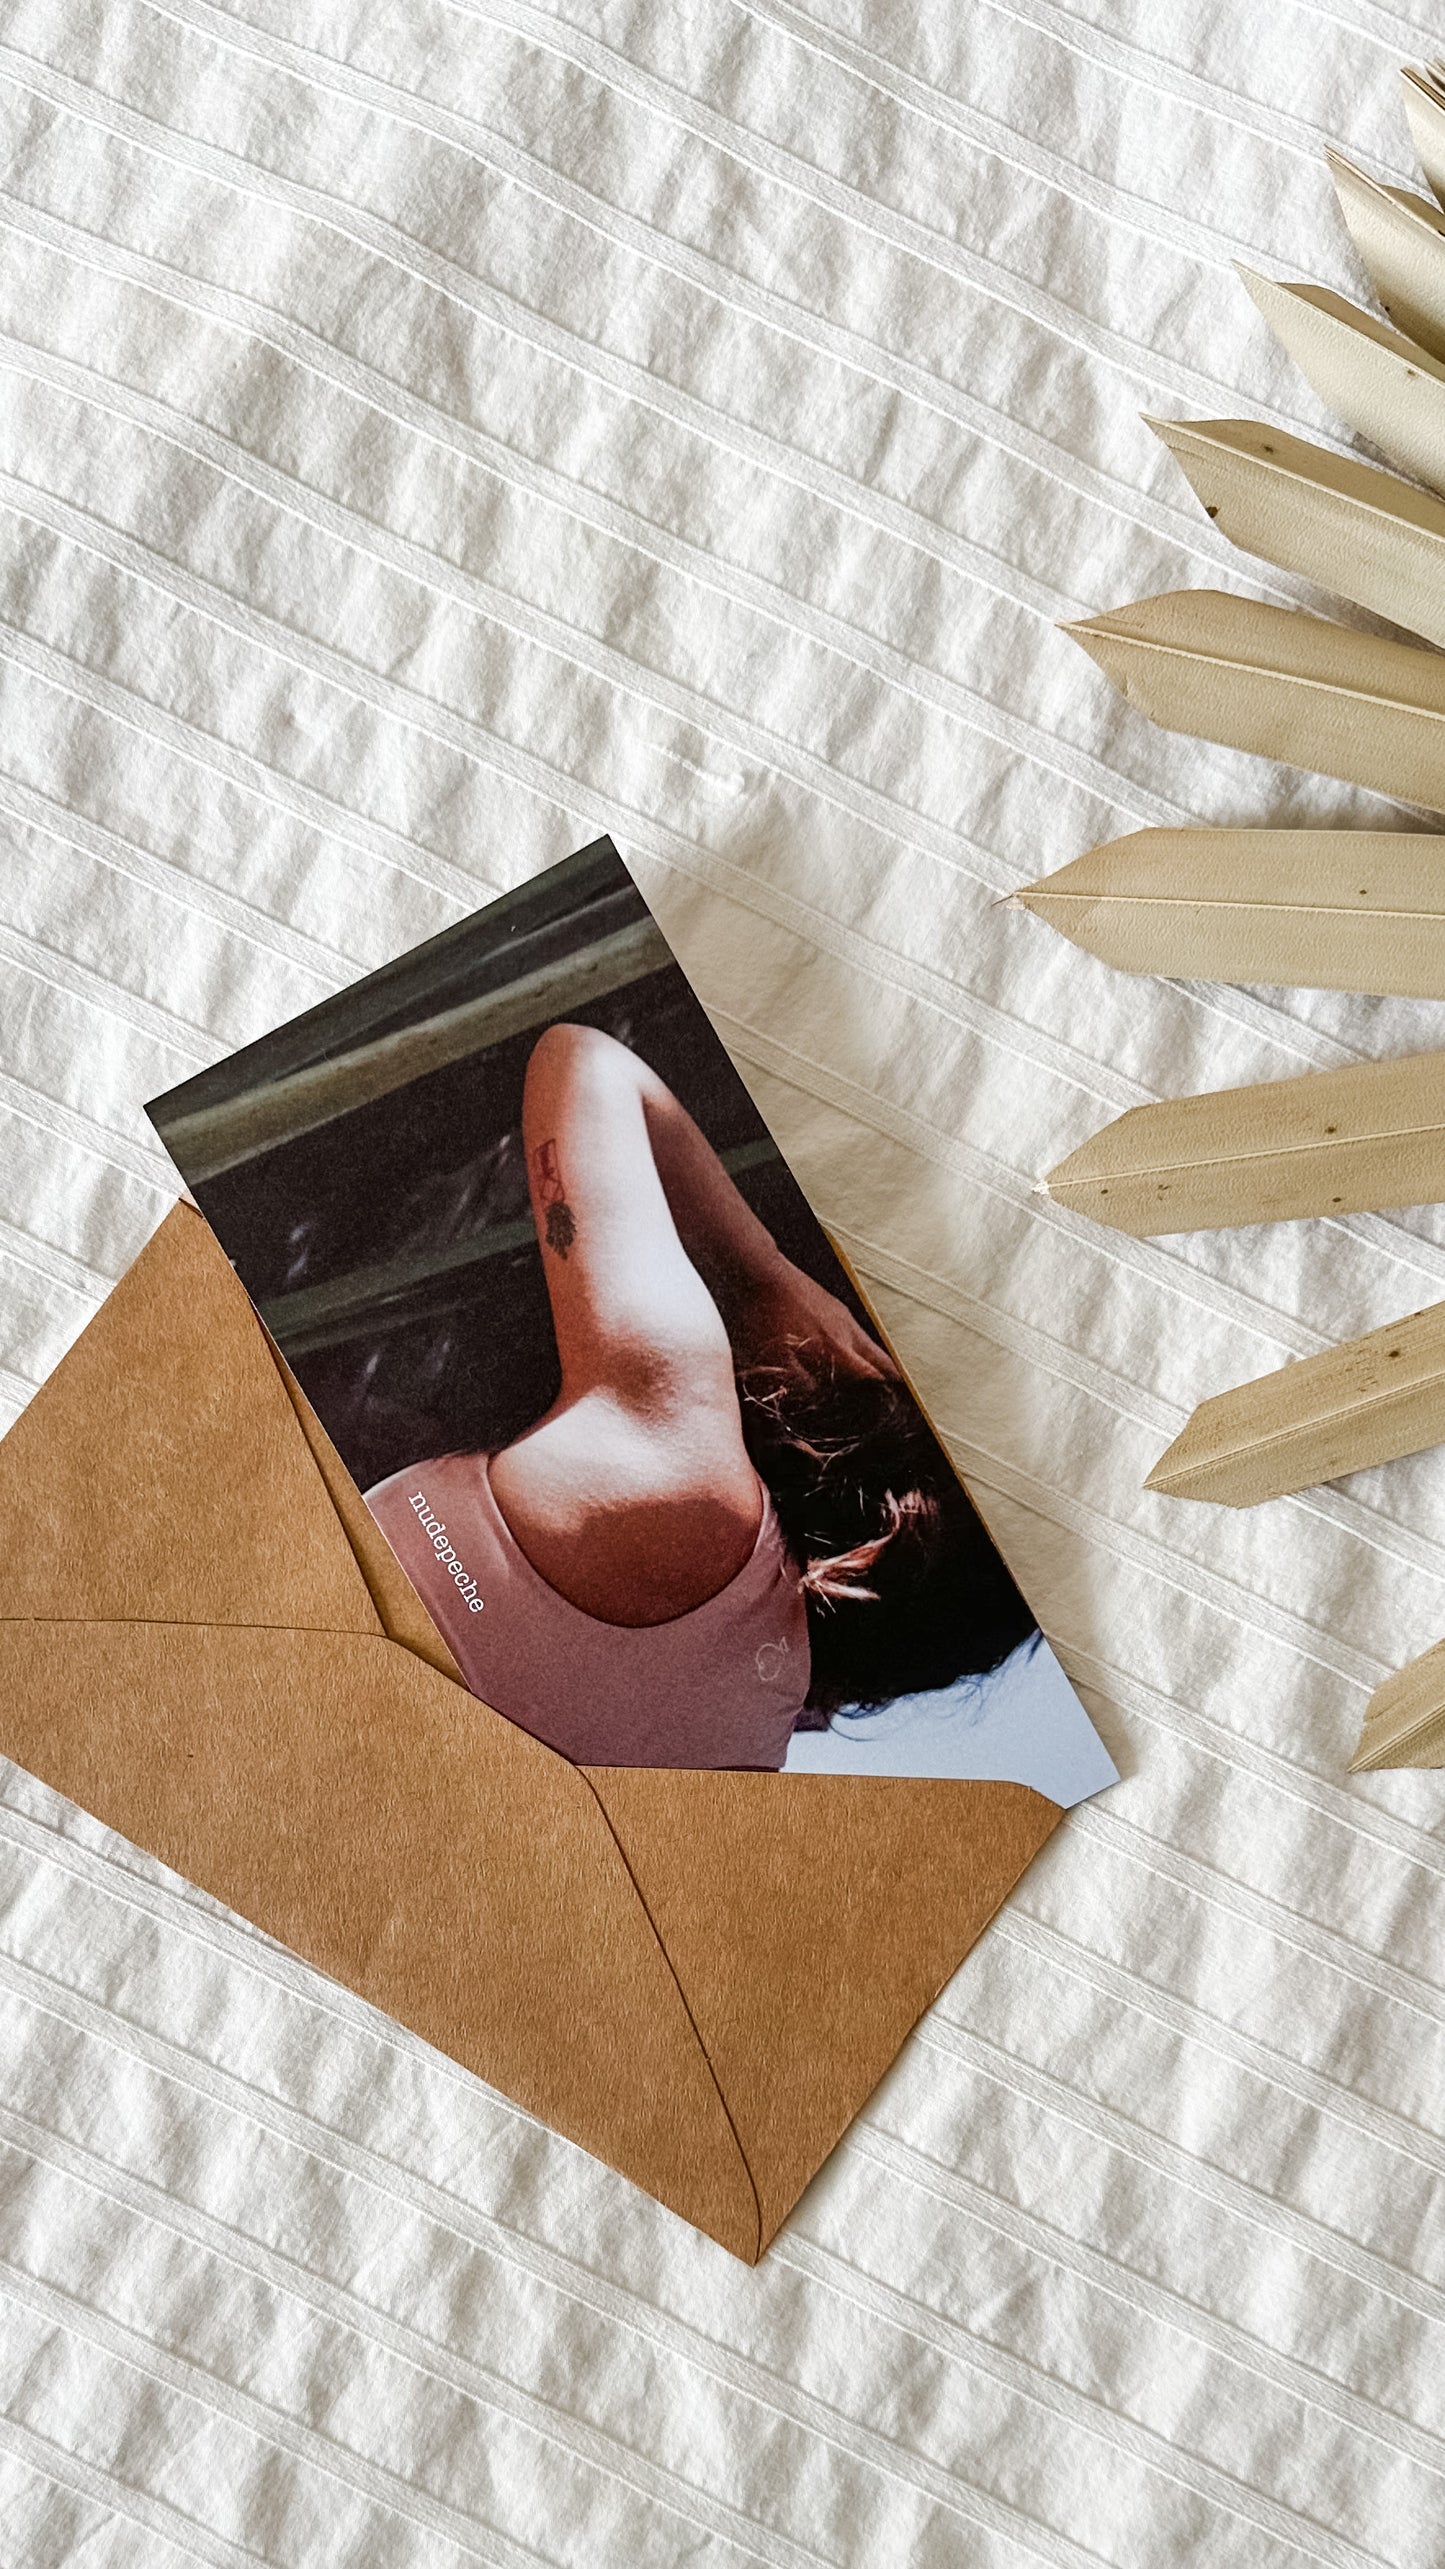 Nudepeche Gift Card